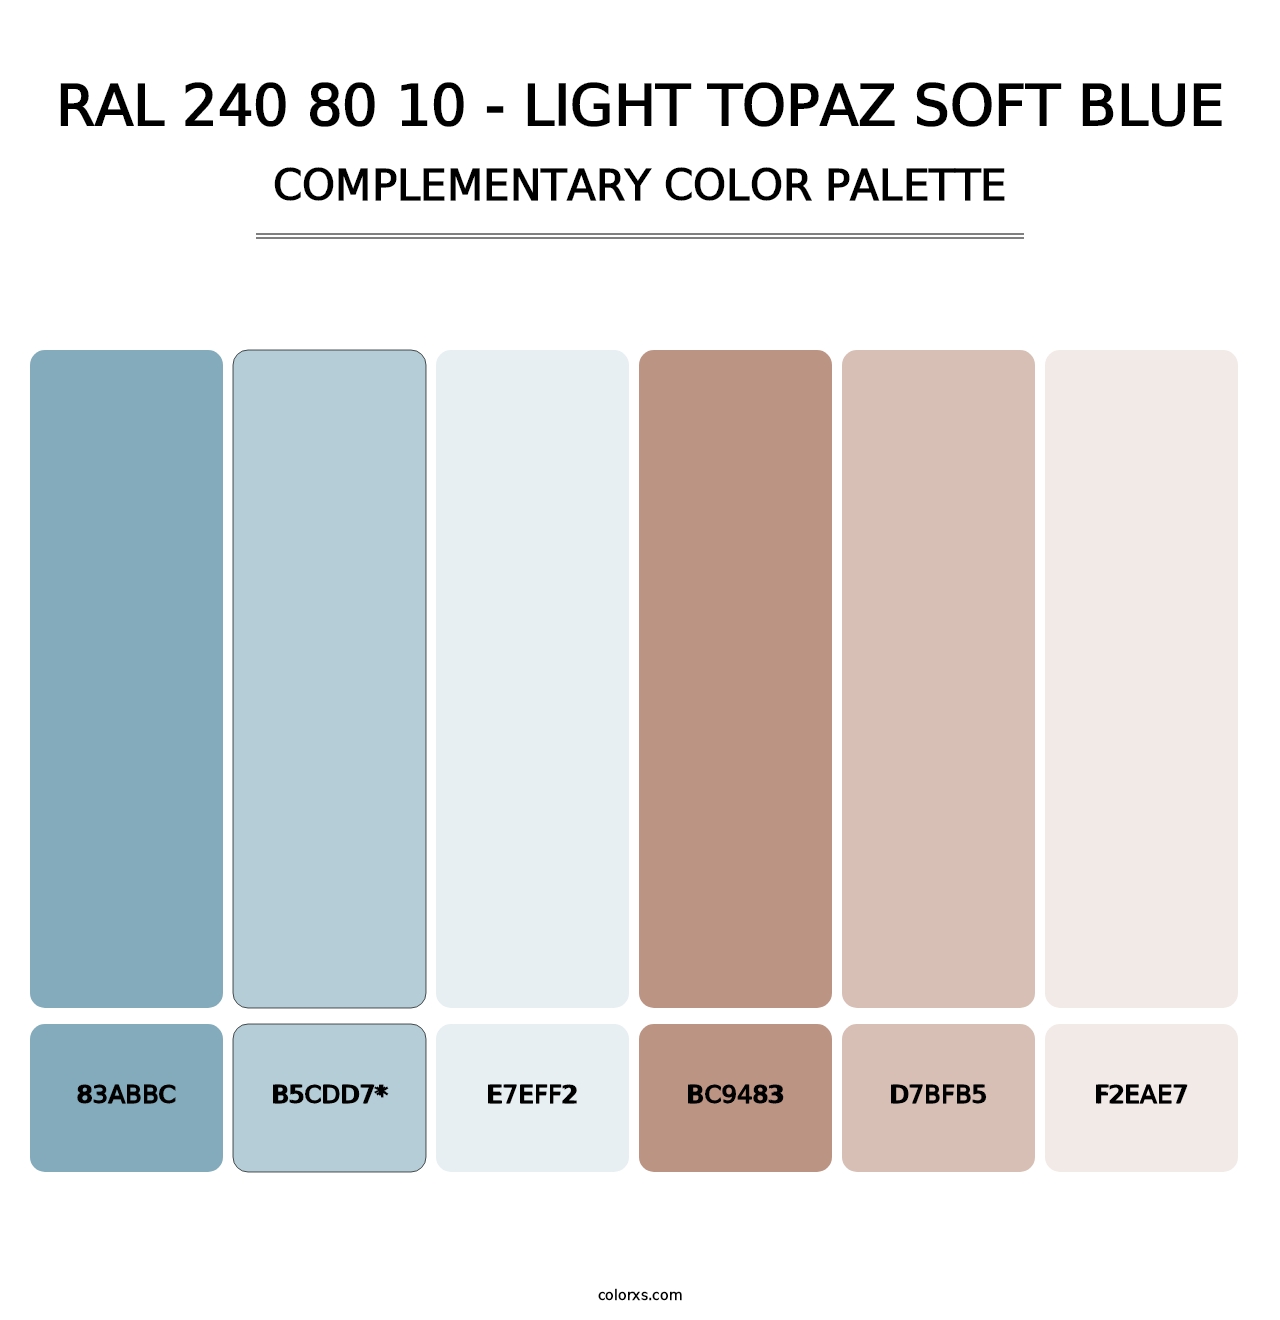 RAL 240 80 10 - Light Topaz Soft Blue - Complementary Color Palette